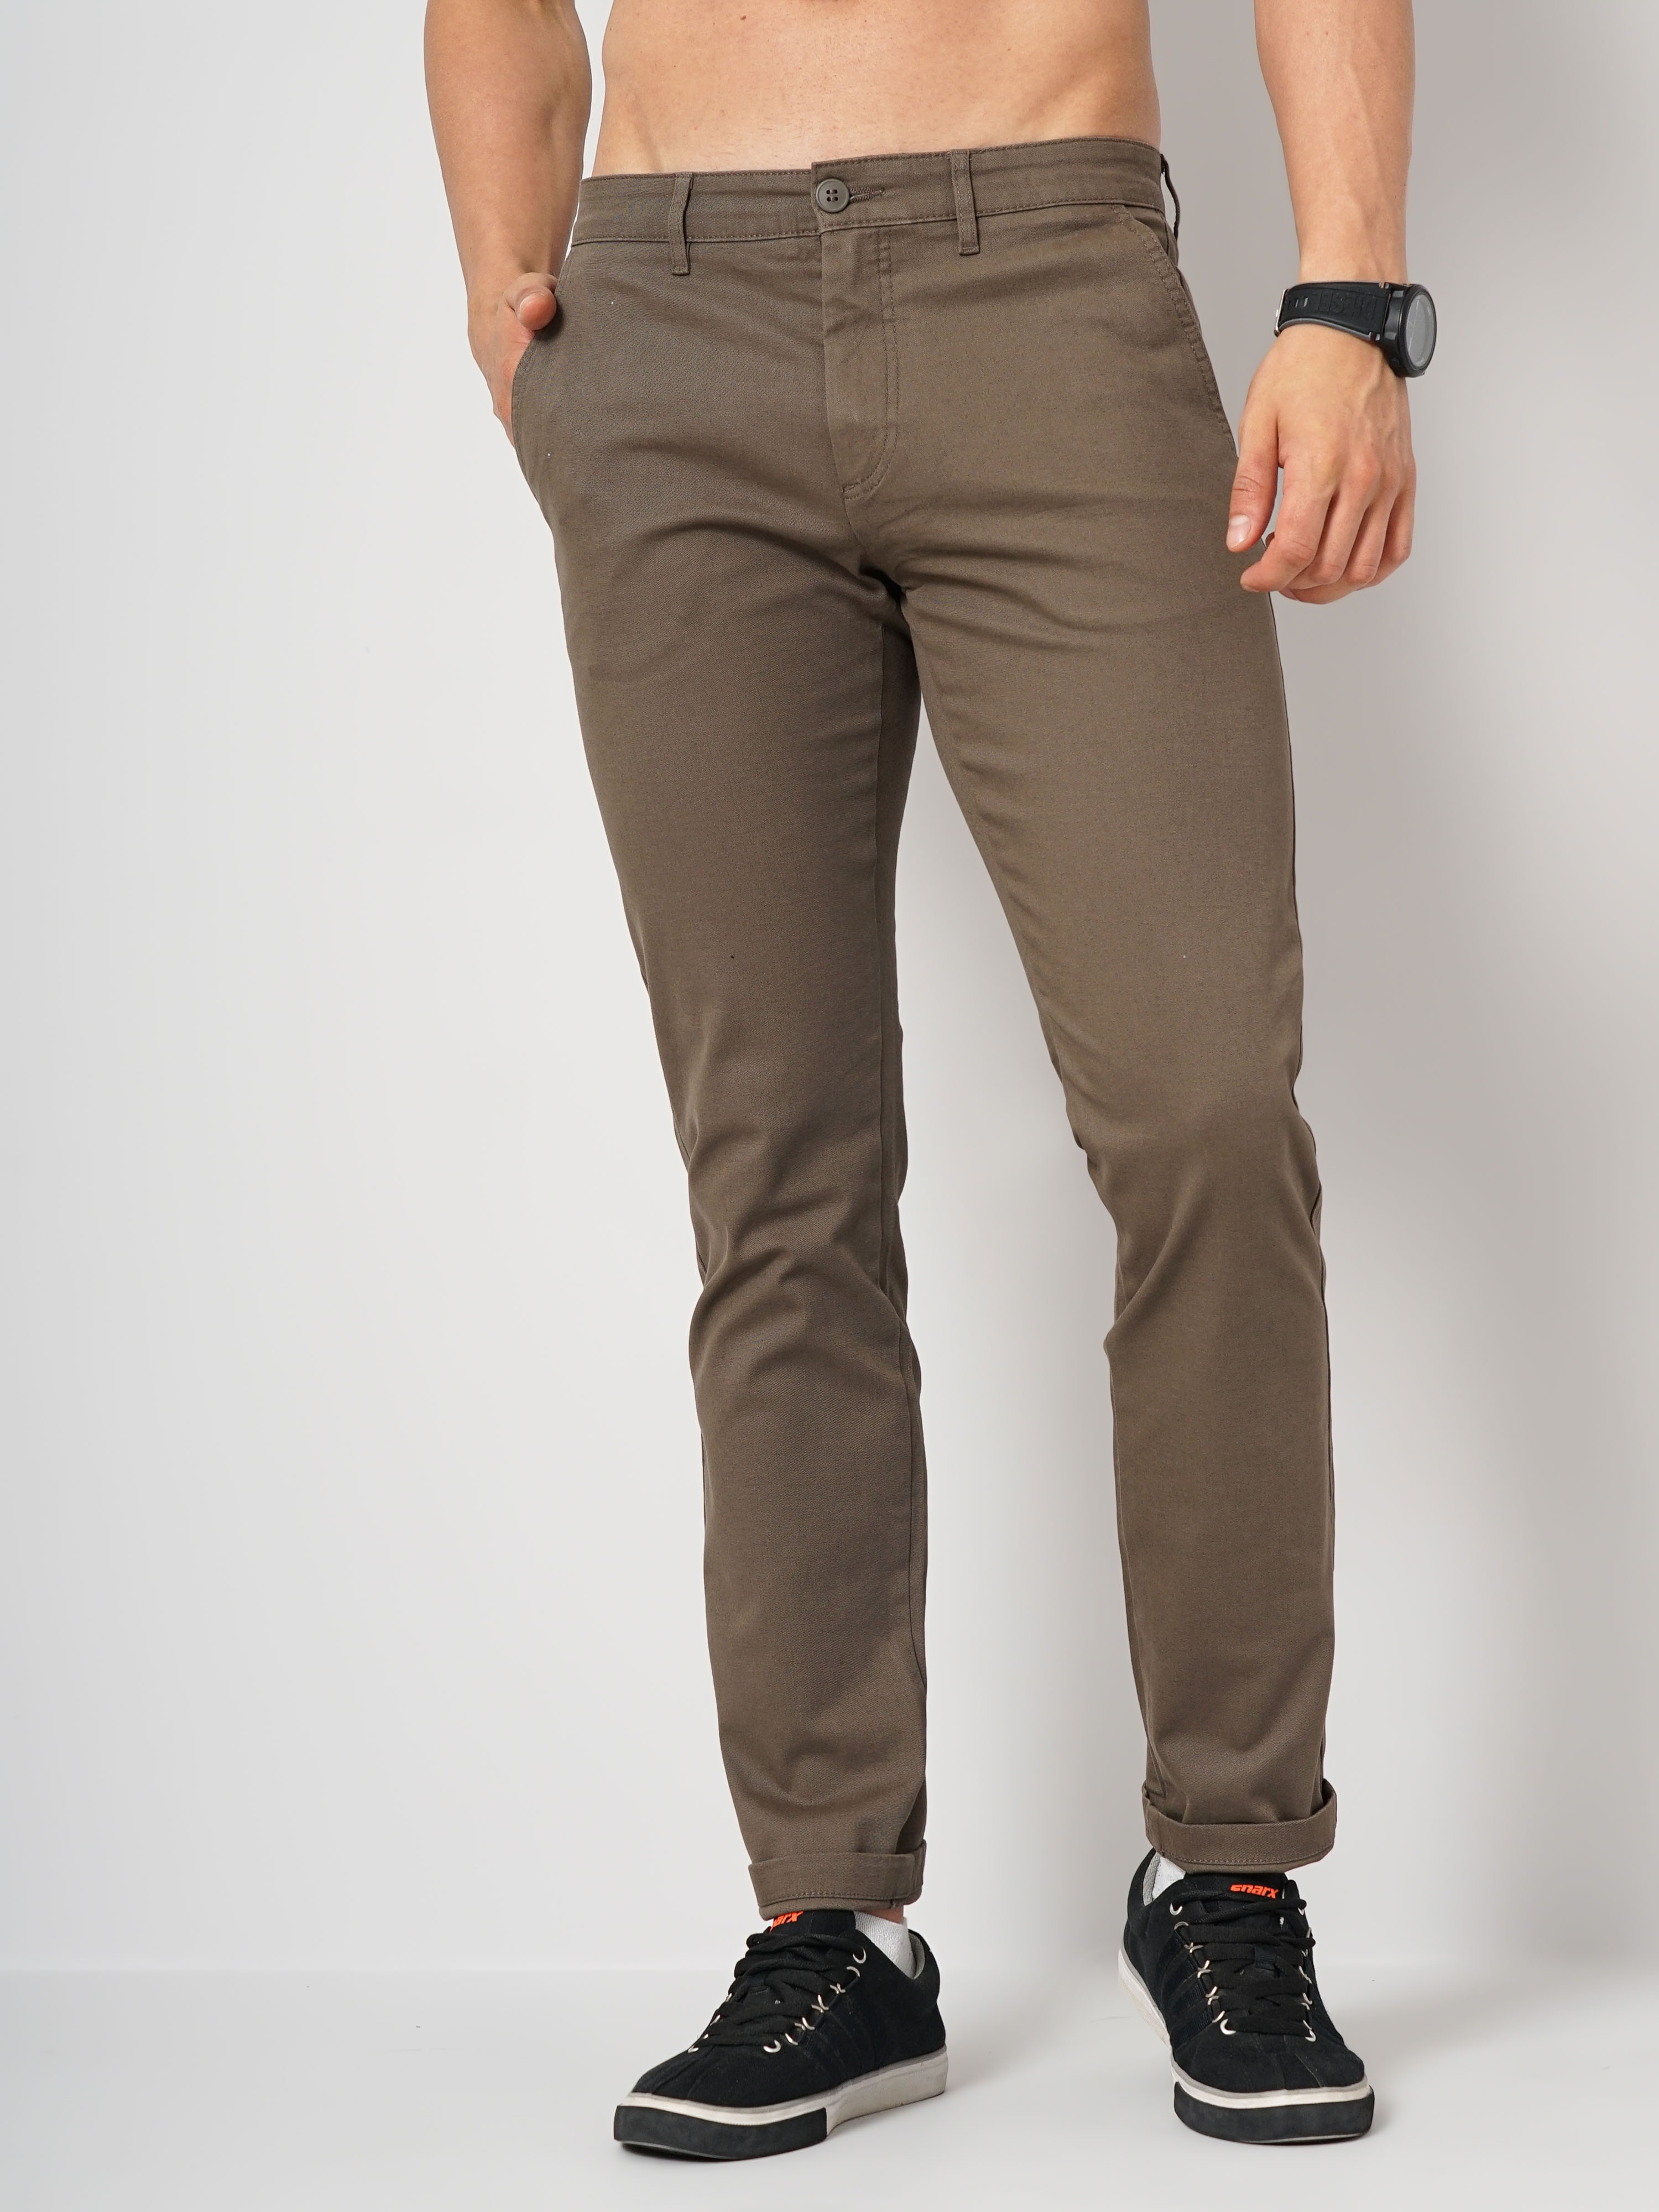 Men's Solid Brown Trouser